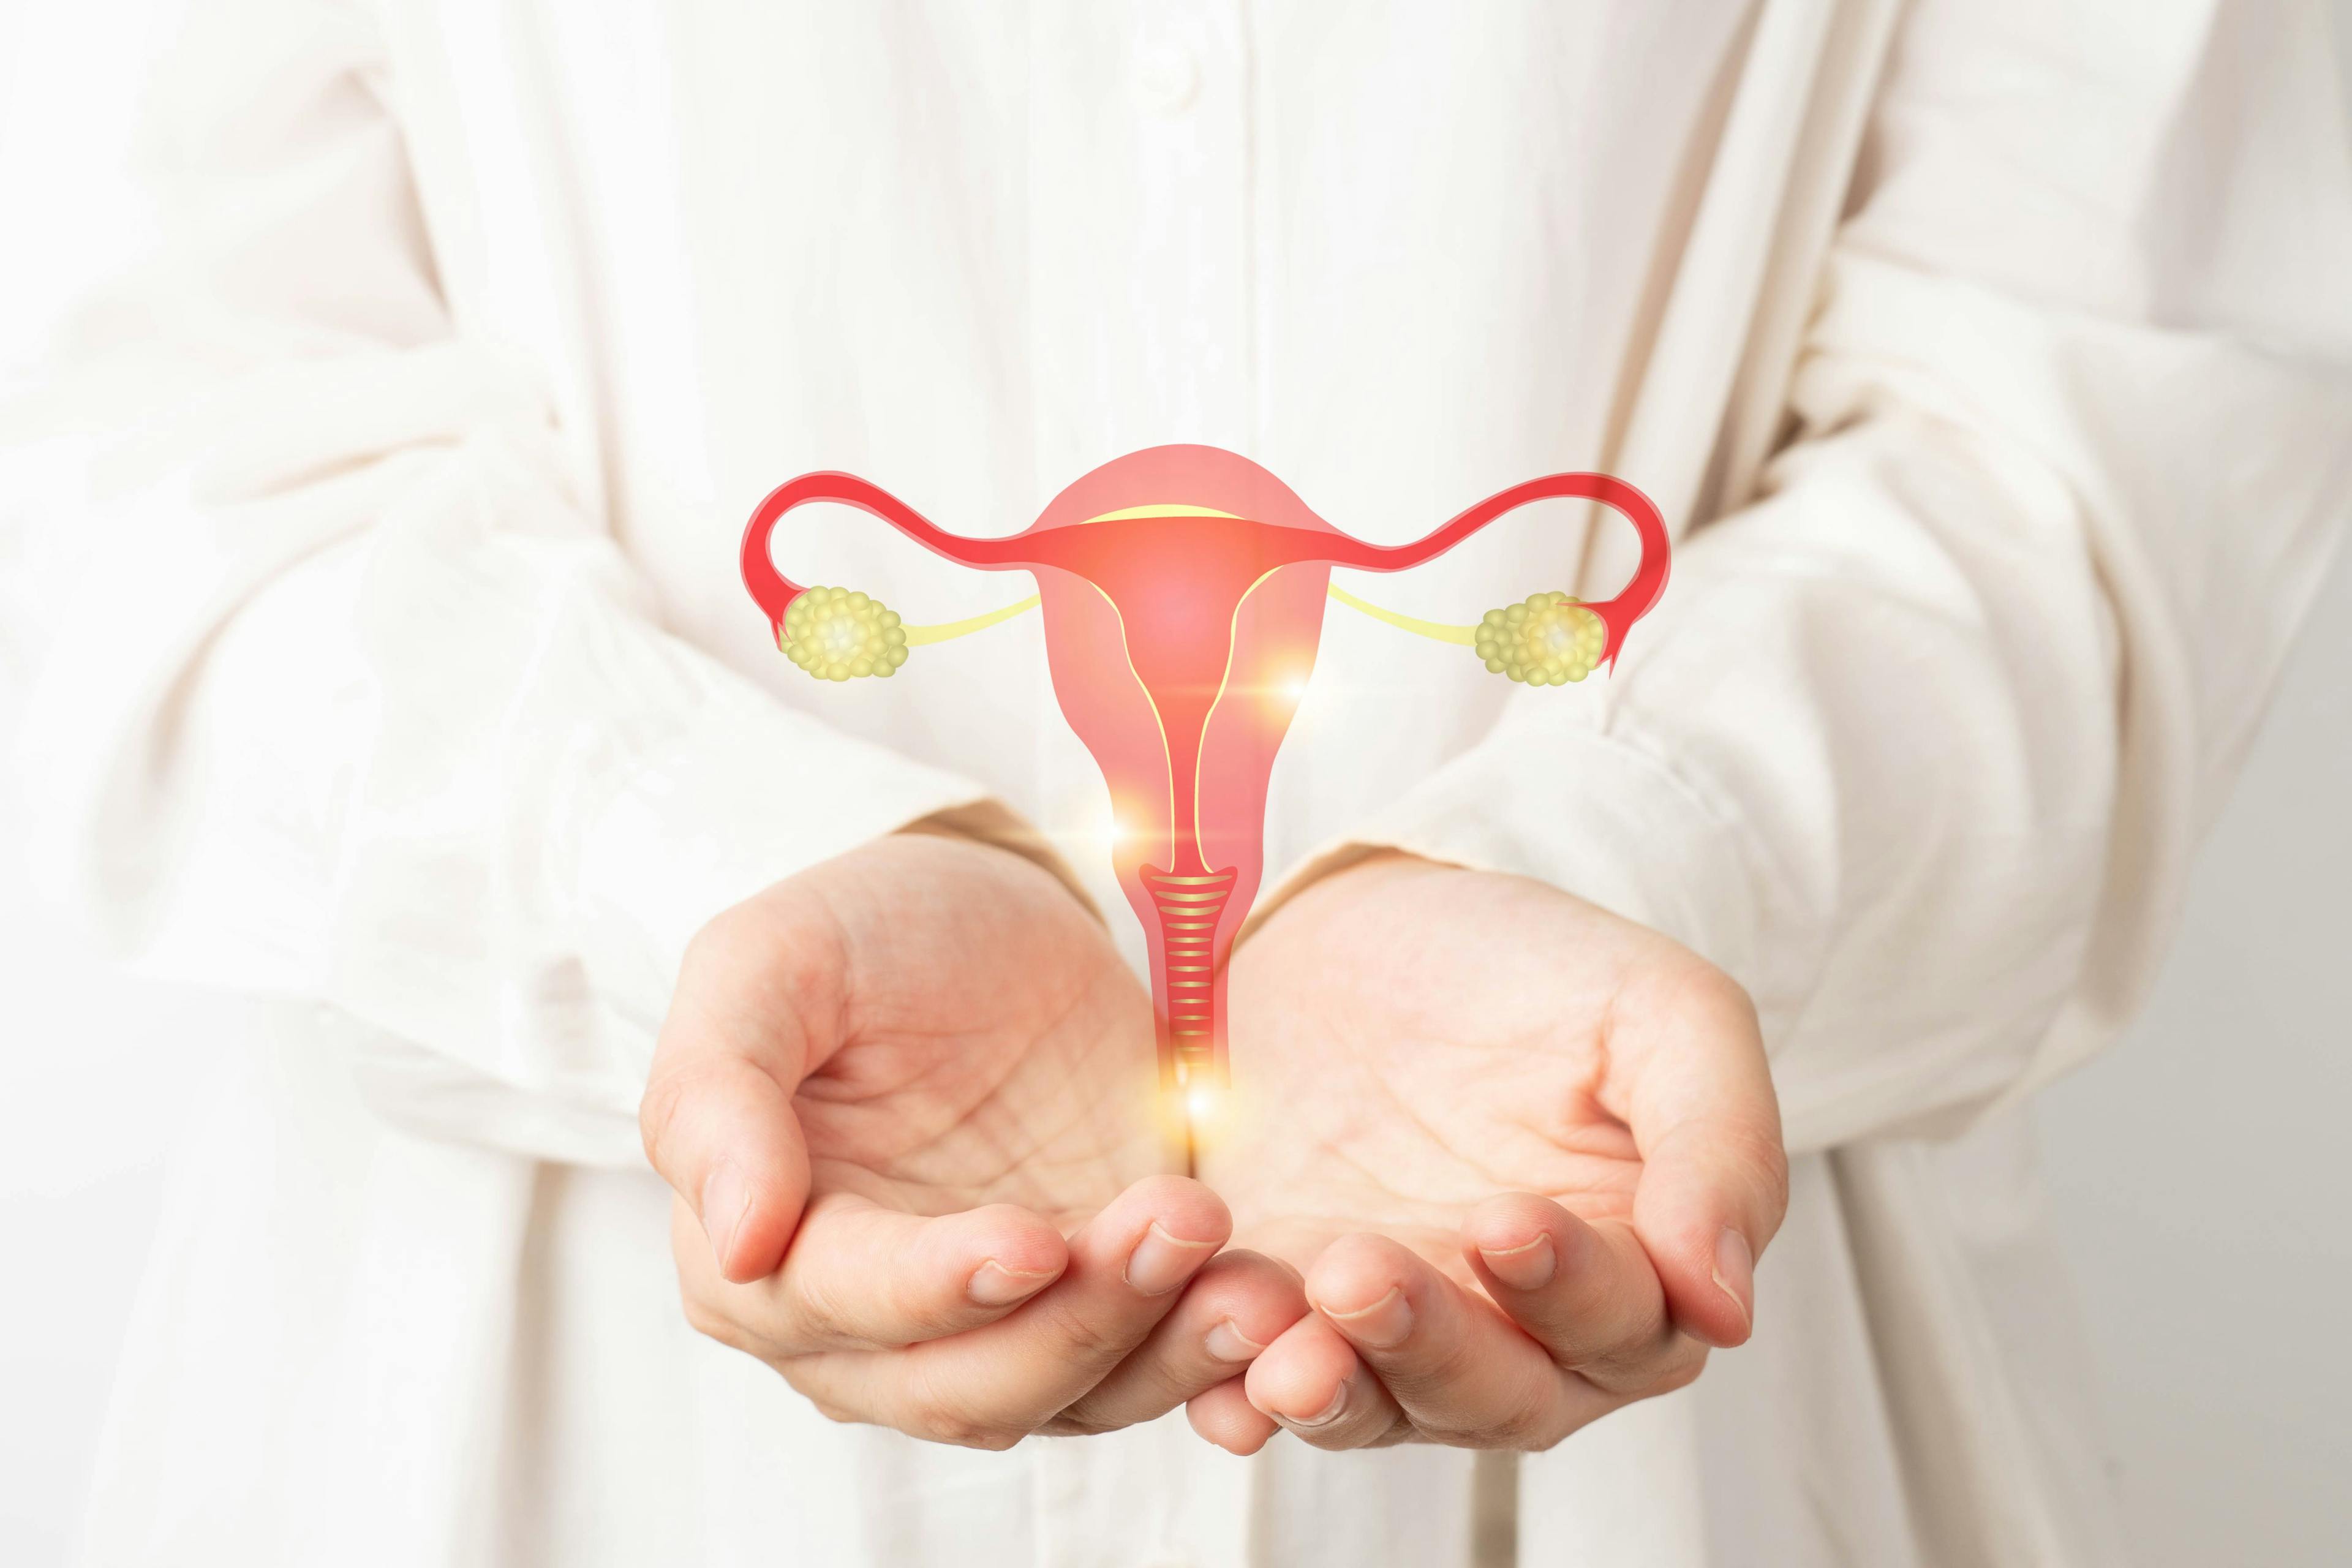 Doctor holding animated uterus and ovaries anatomy | Image Credit: Orawan - stock.adobe.com